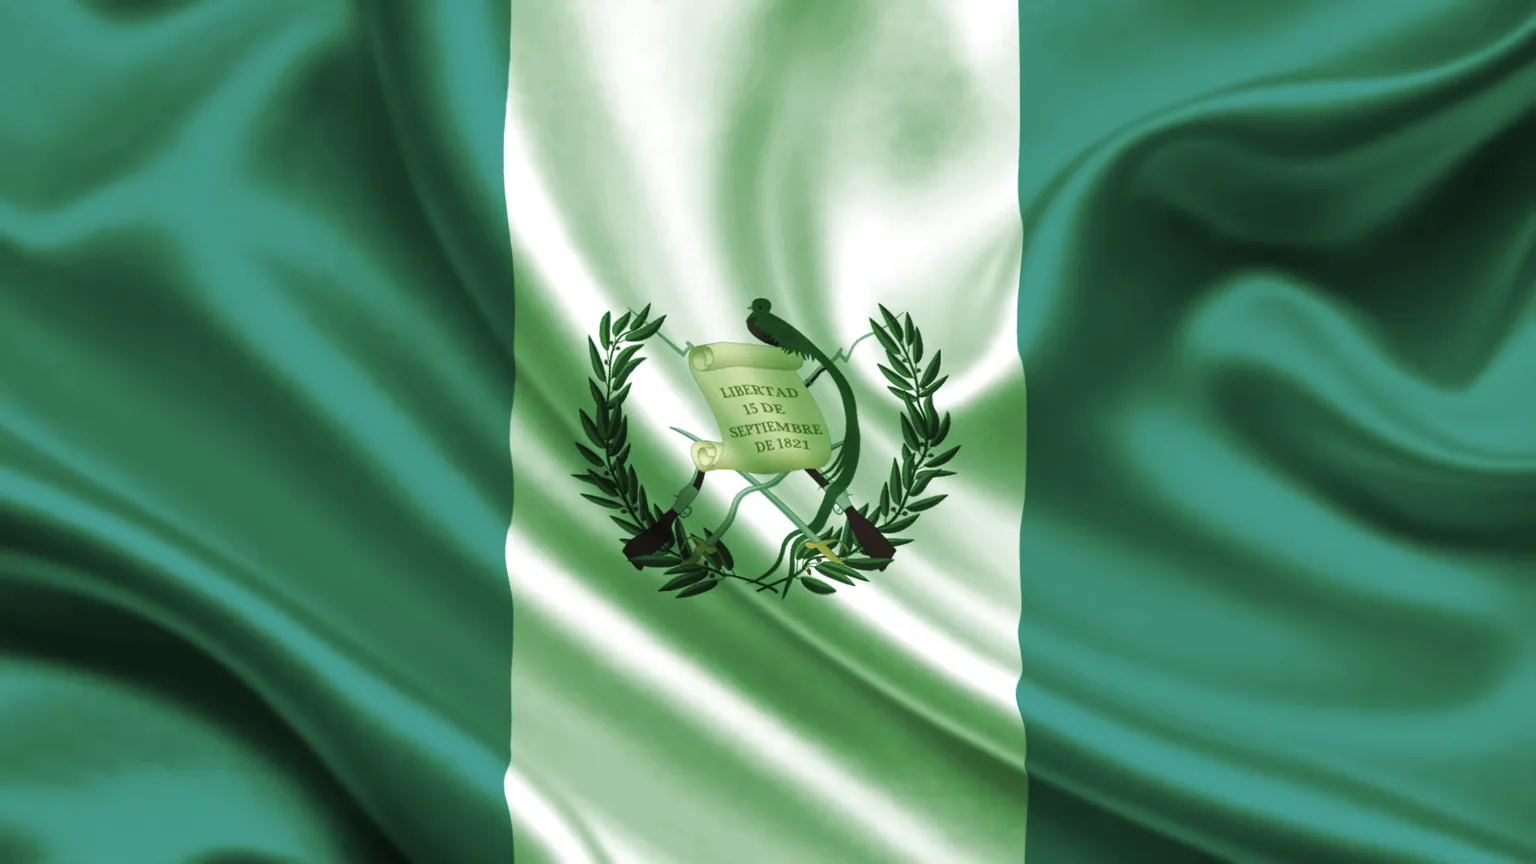 Bandera de Guatemala. Imagen: Free Large Images